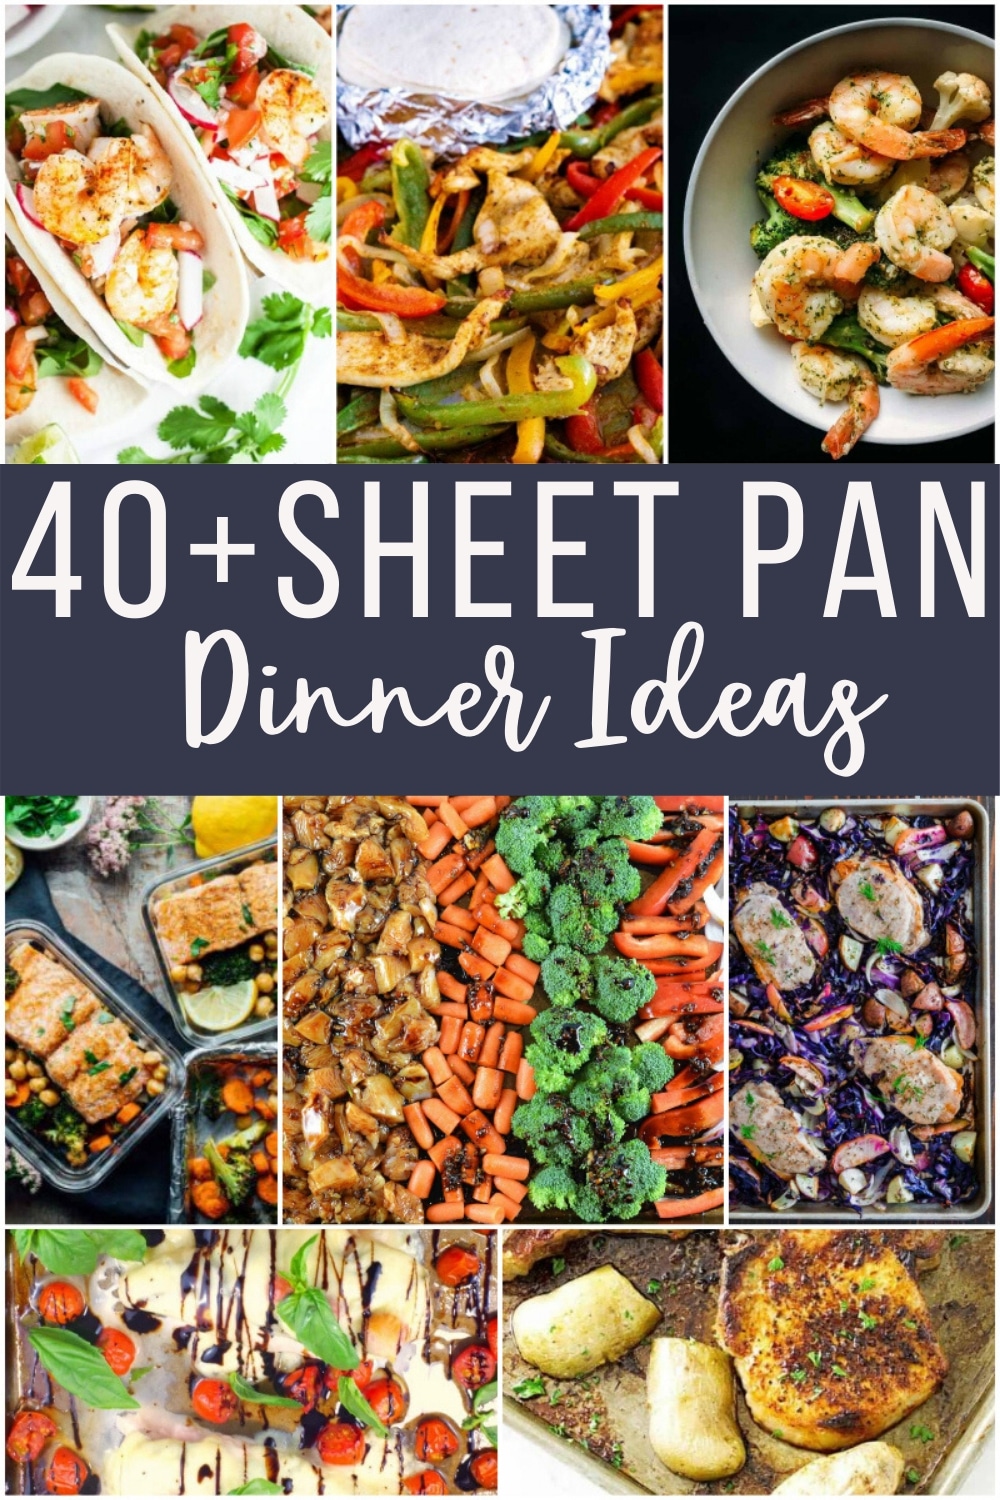 More Than 40 Simple + Easy Sheet Pan Dinner Ideas